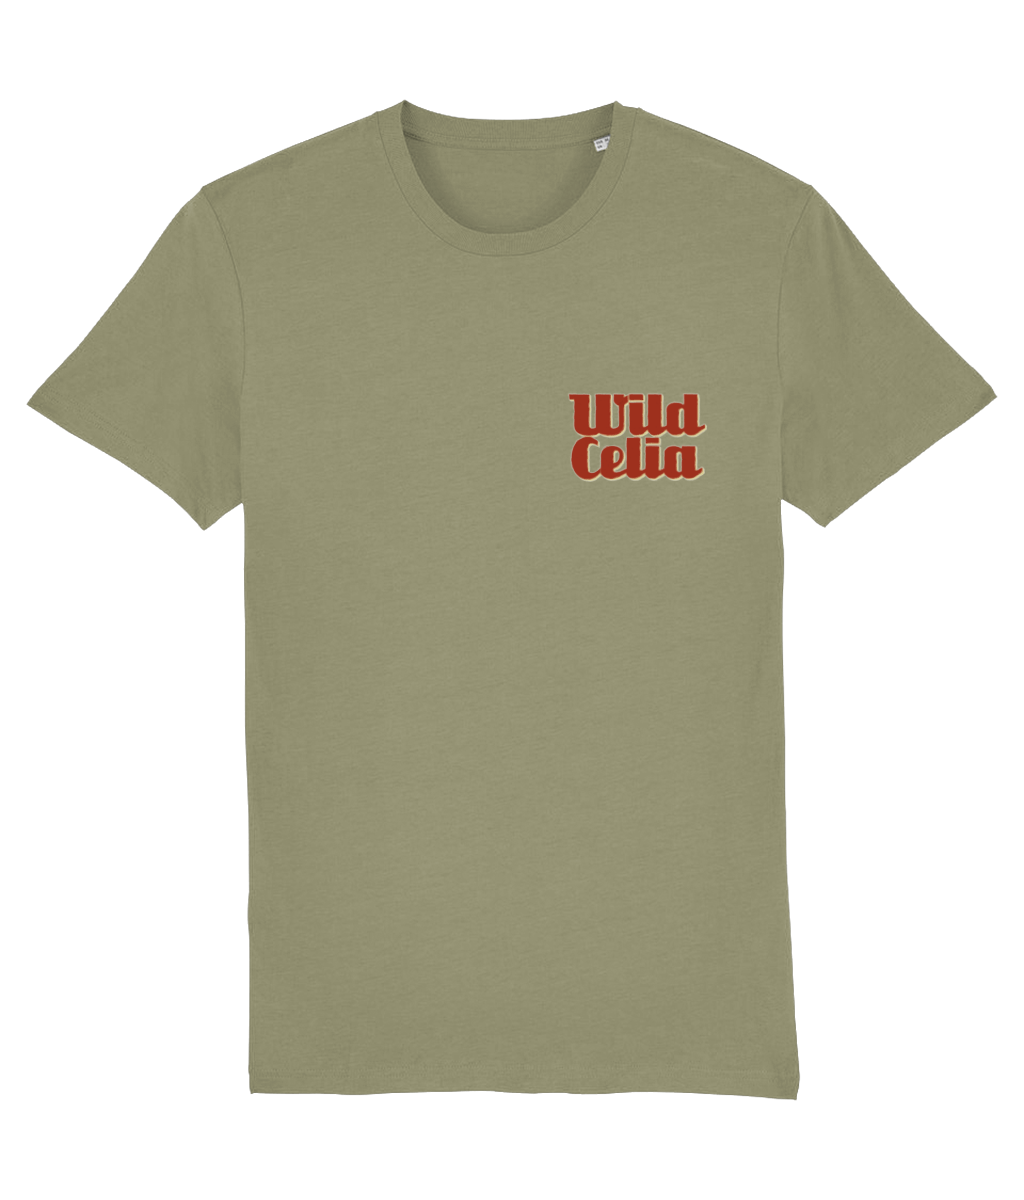 Wild Celia T-shirt